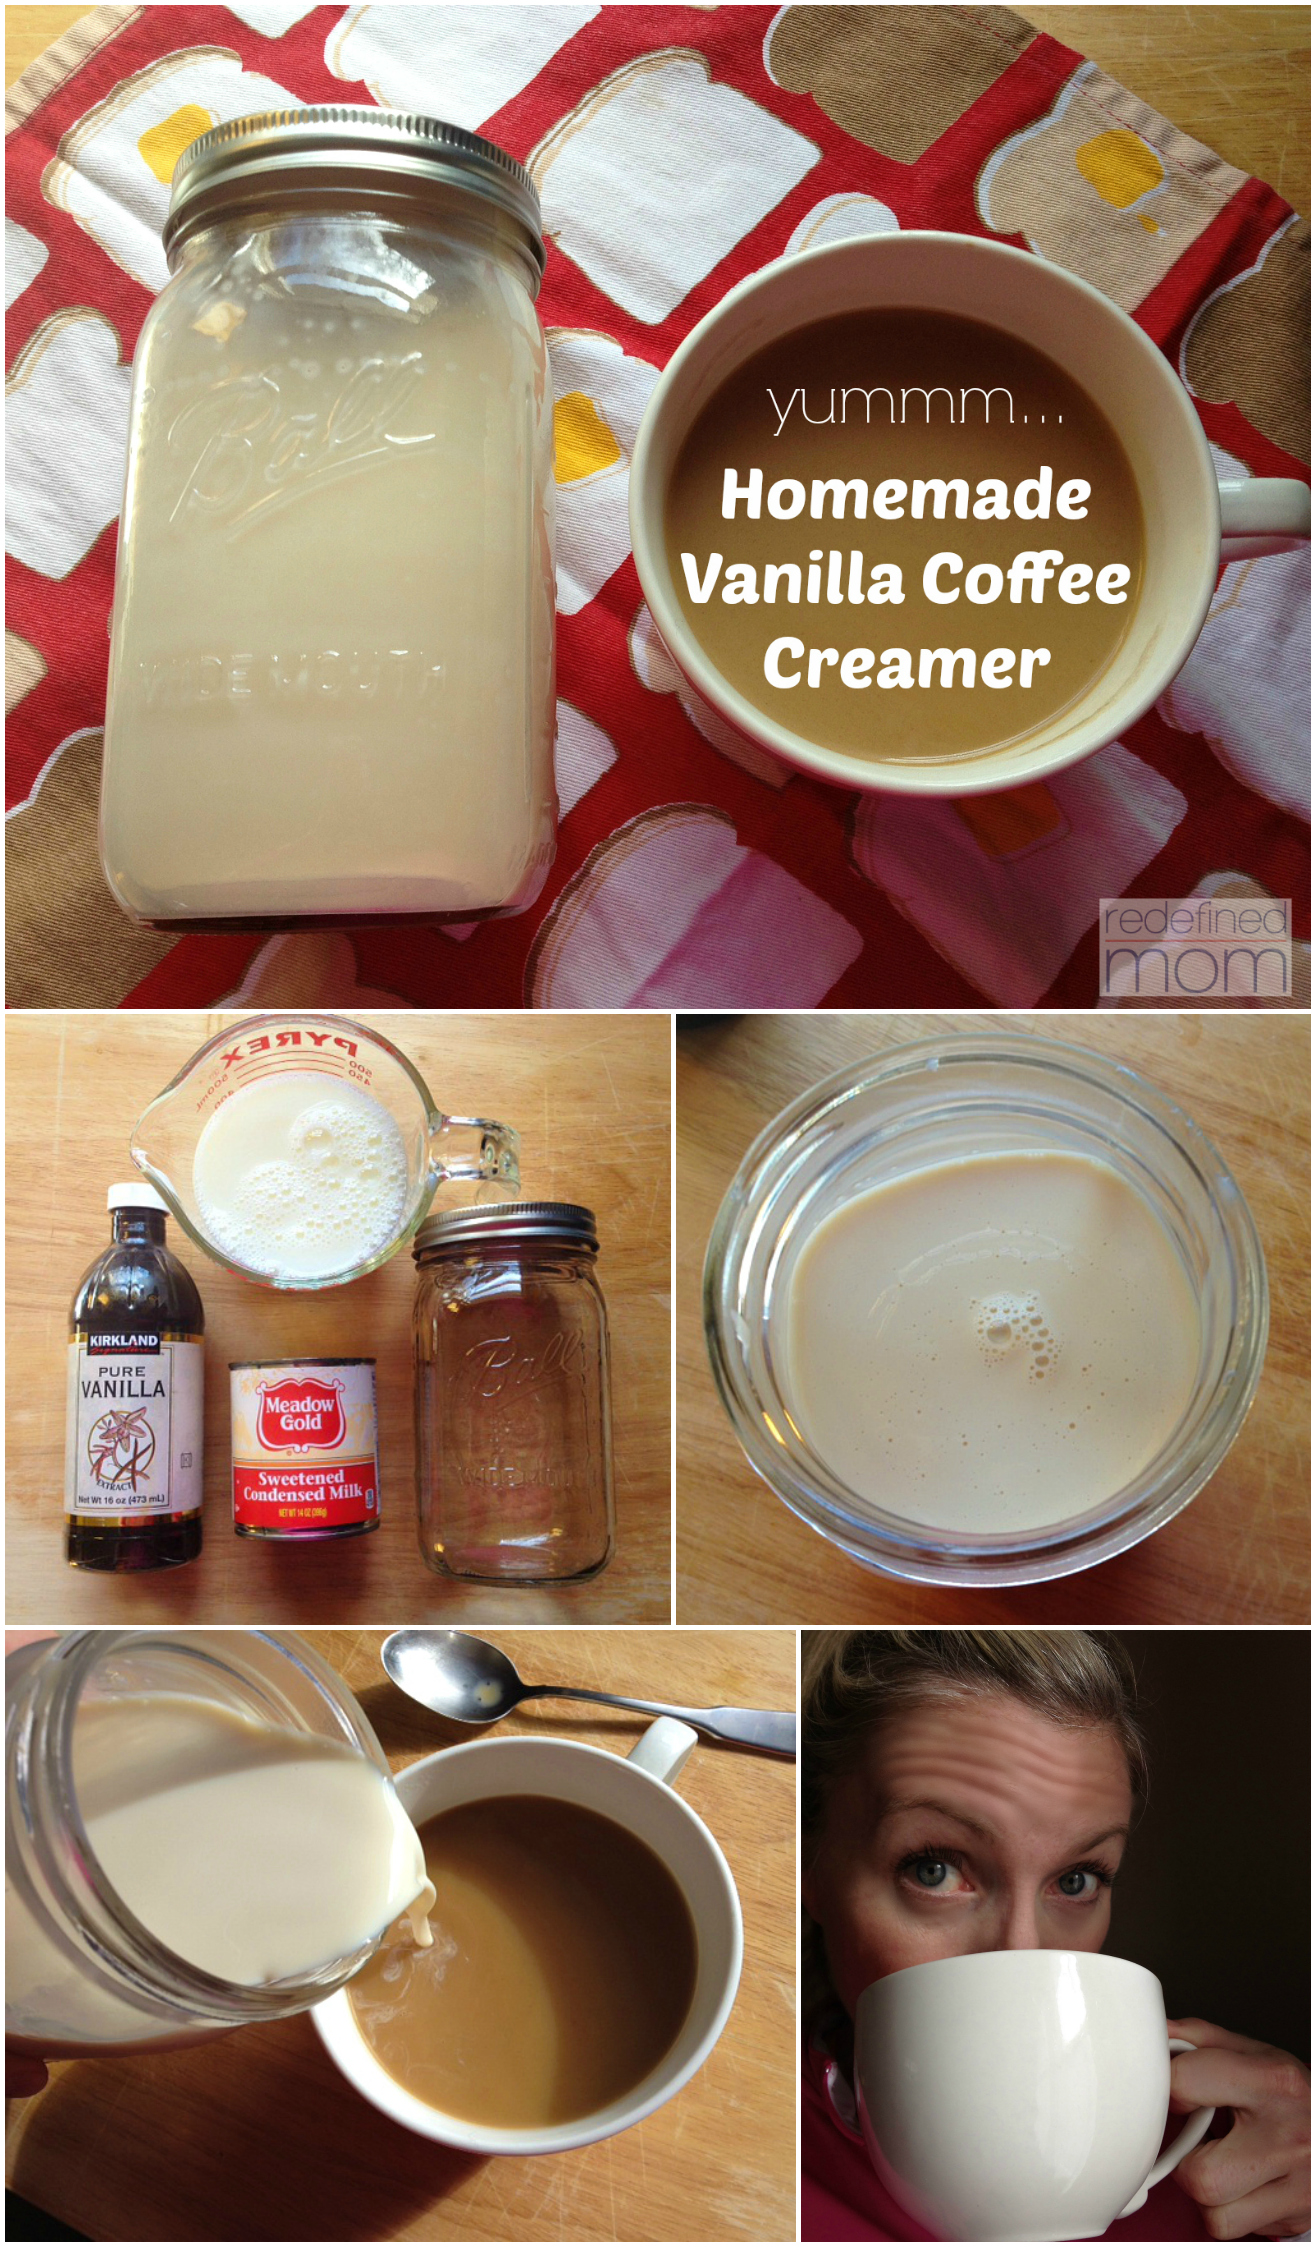 https://redefinedmom.com/wp-content/uploads/2015/01/homemade-vanilla-coffee-creamer-Collage.jpg